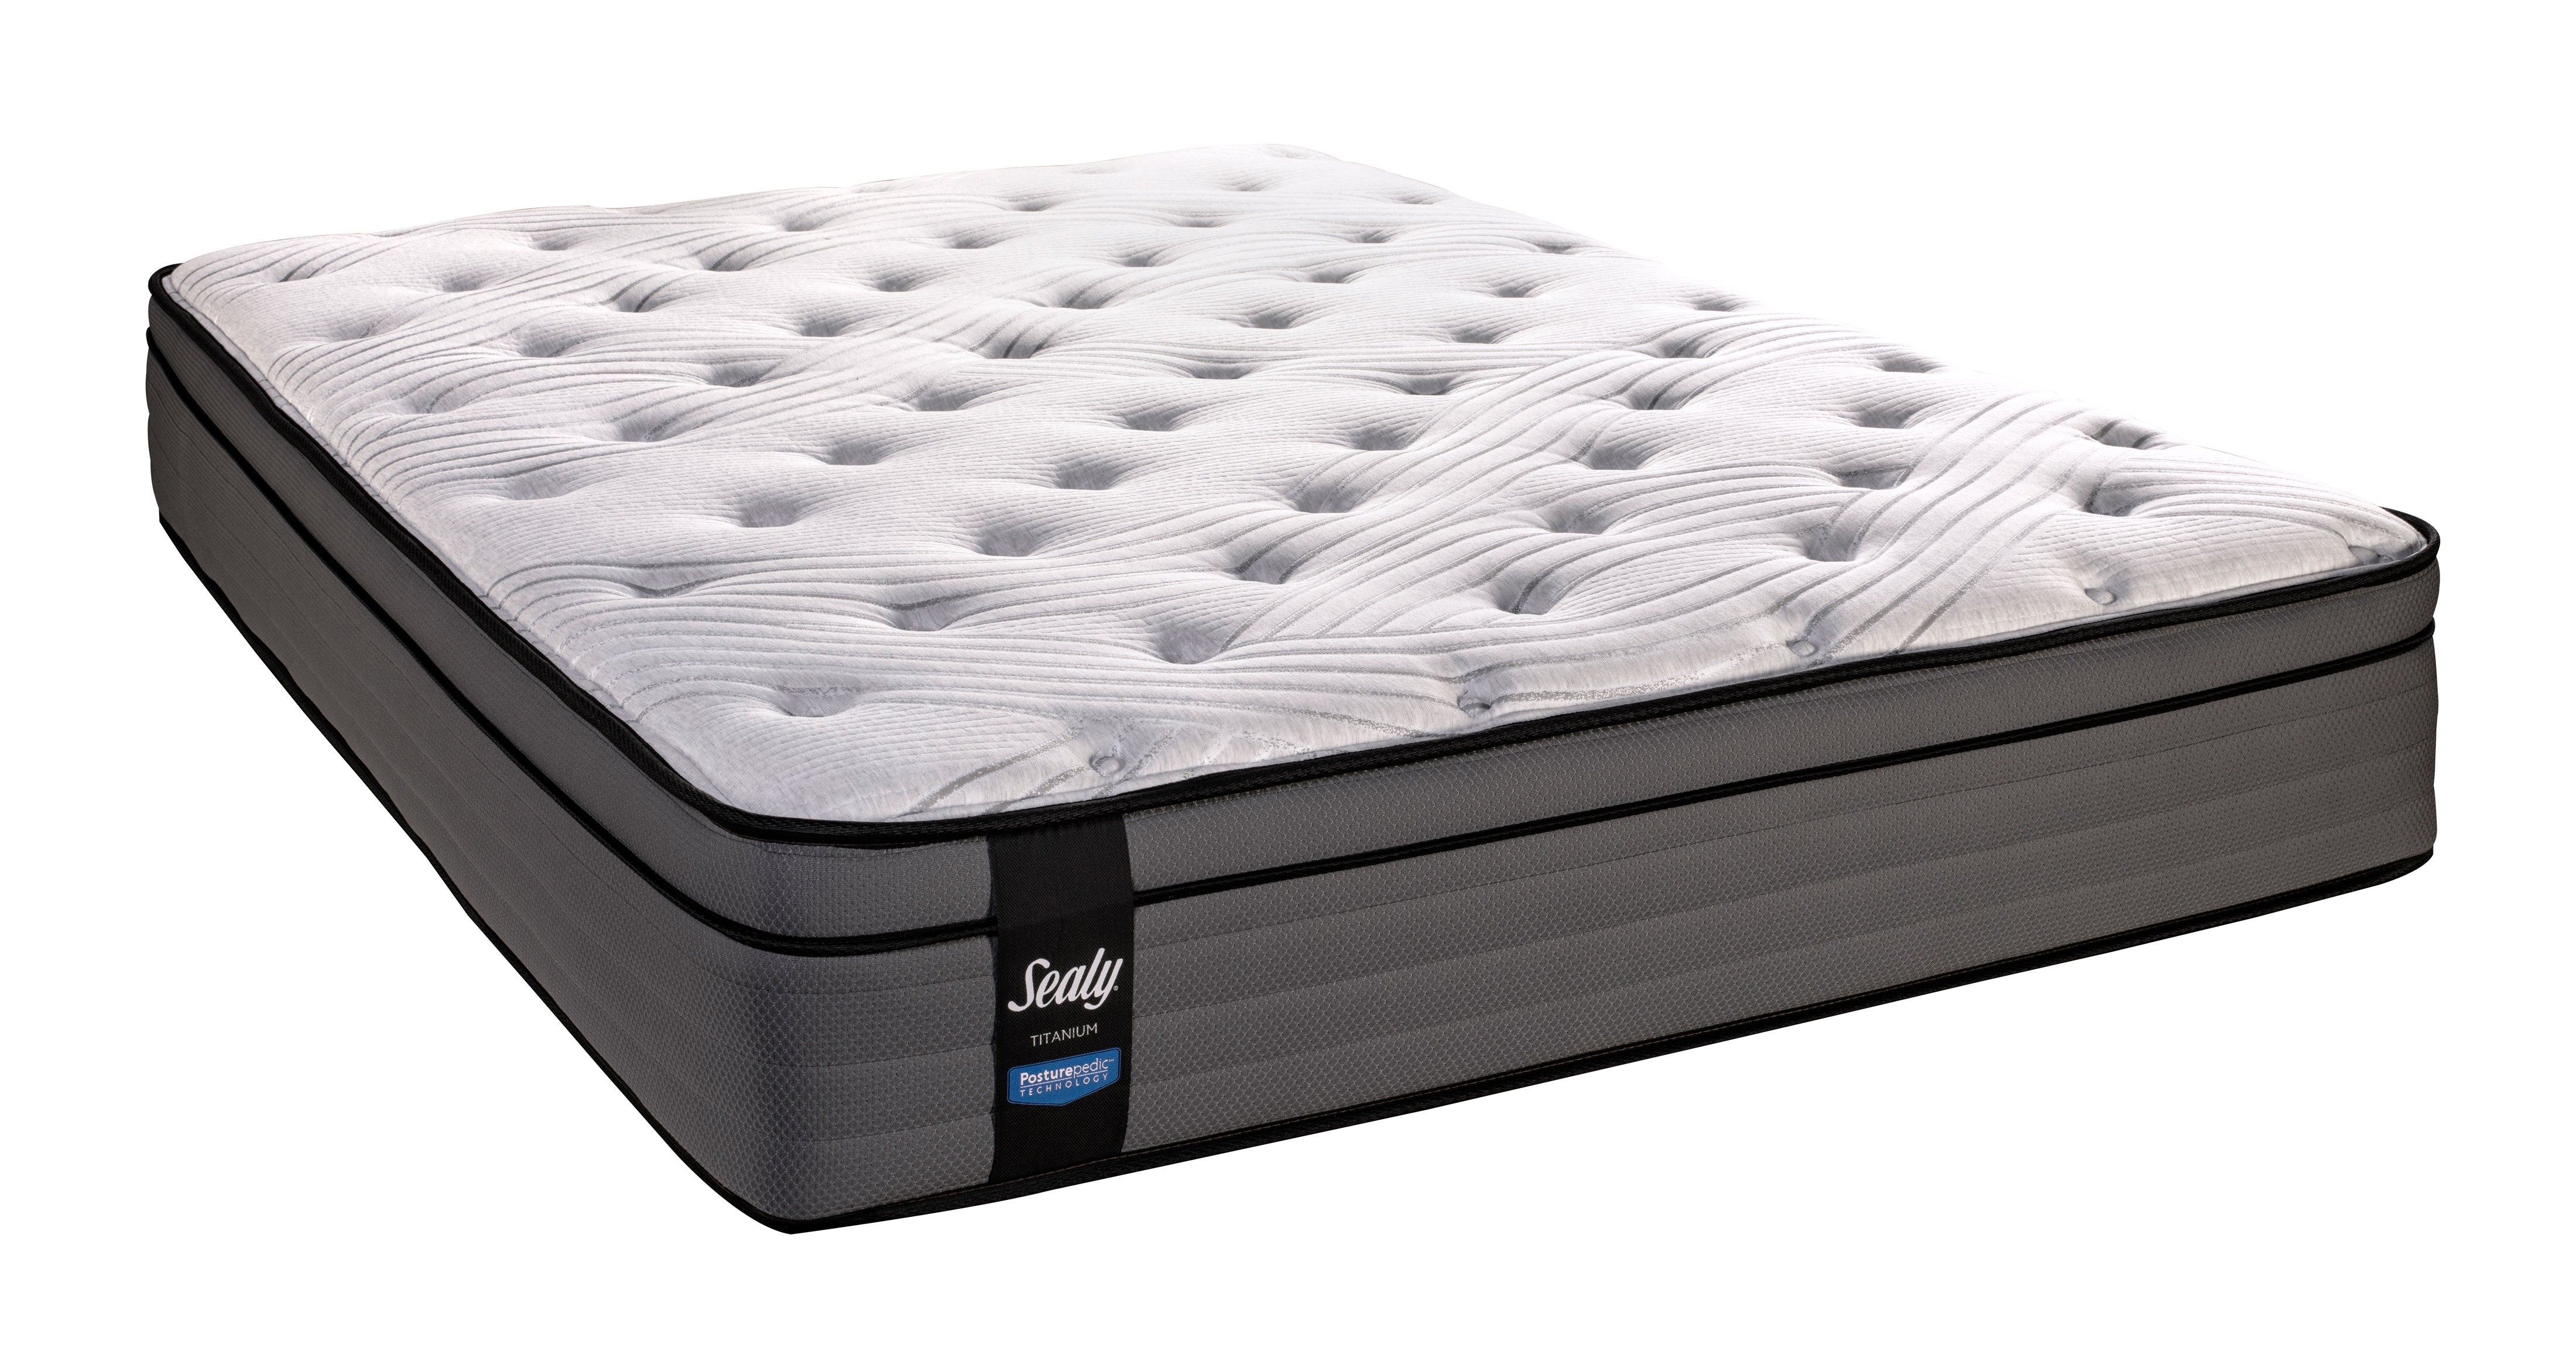 firm twin mattress ikea